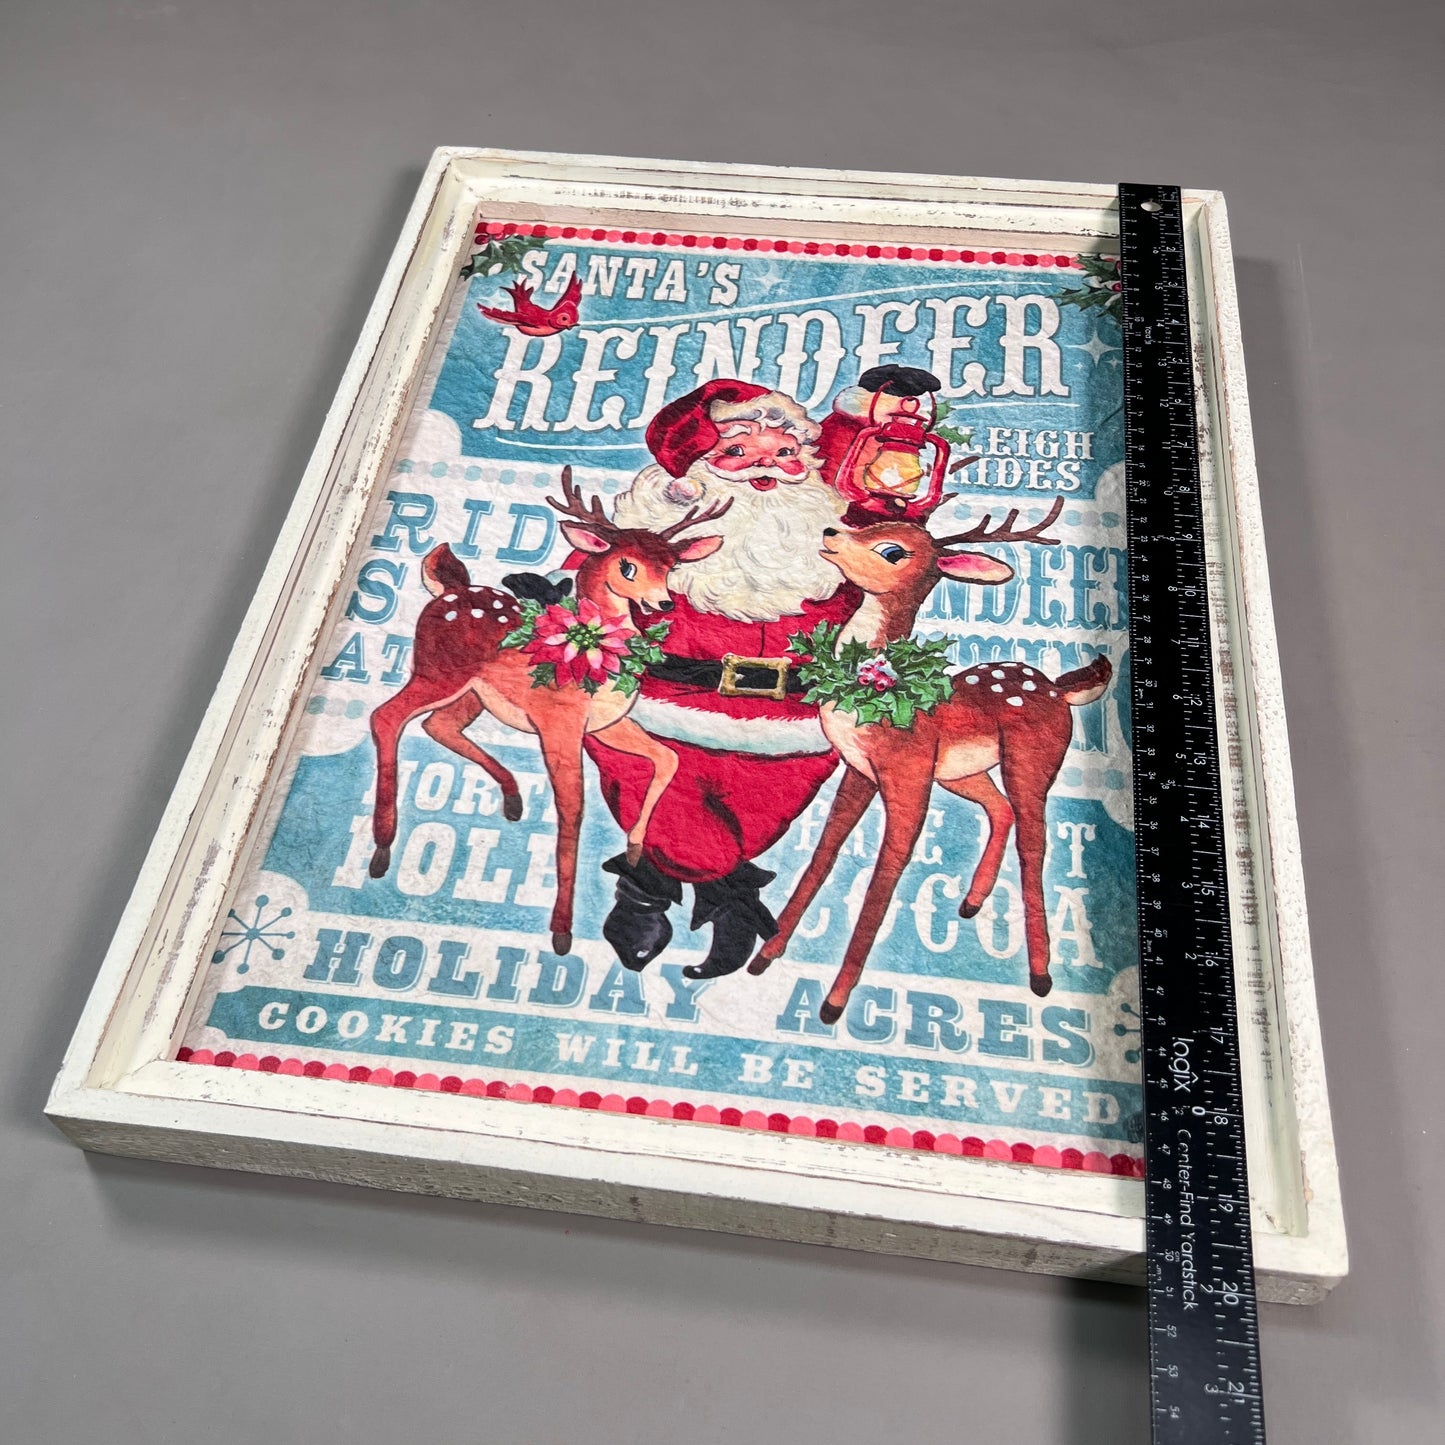 3-PK! RAZ IMPORTS 19.75" Santa's Reindeer Textured Paper Framed Christmas Wall Art 4159144 (New)